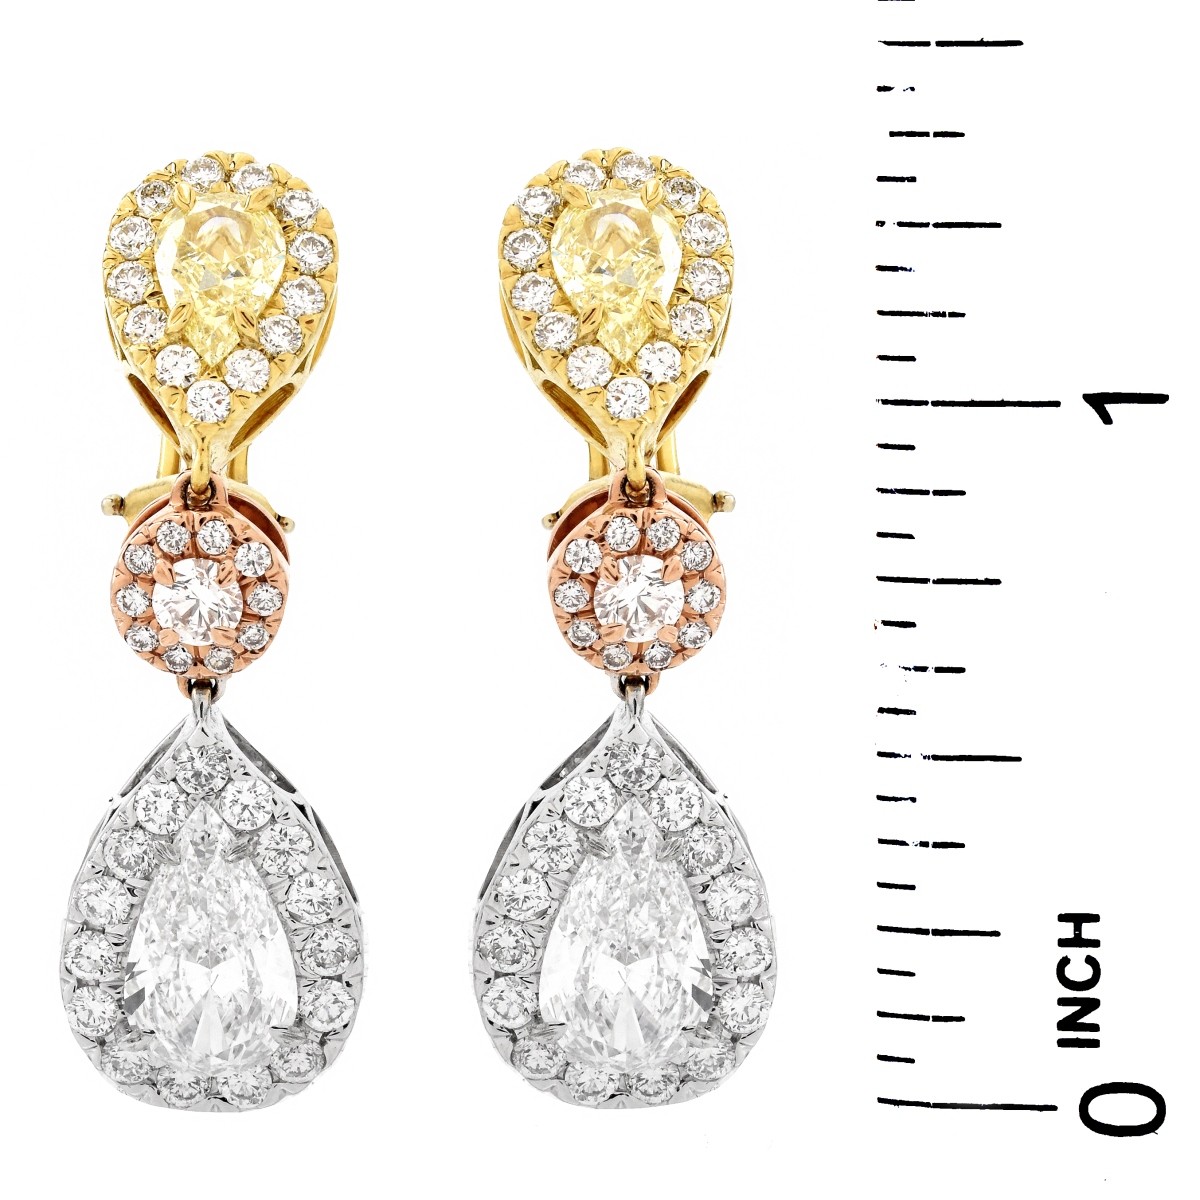 GIA 5.56ct TW Diamond and 18K Gold Earrings.